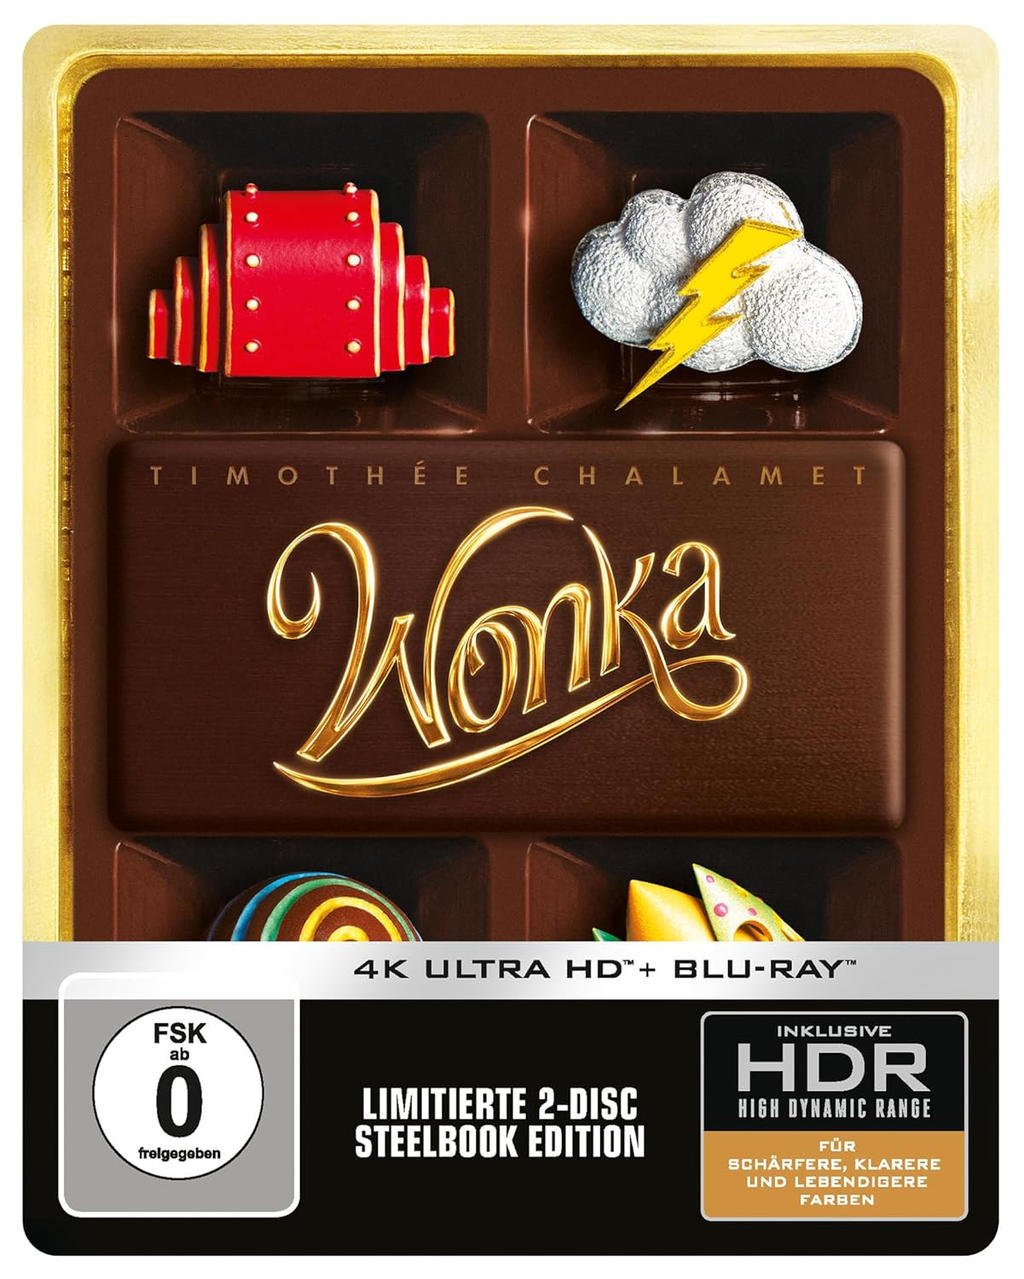 Wonka Exklusive Steelbookedition Blu-ray